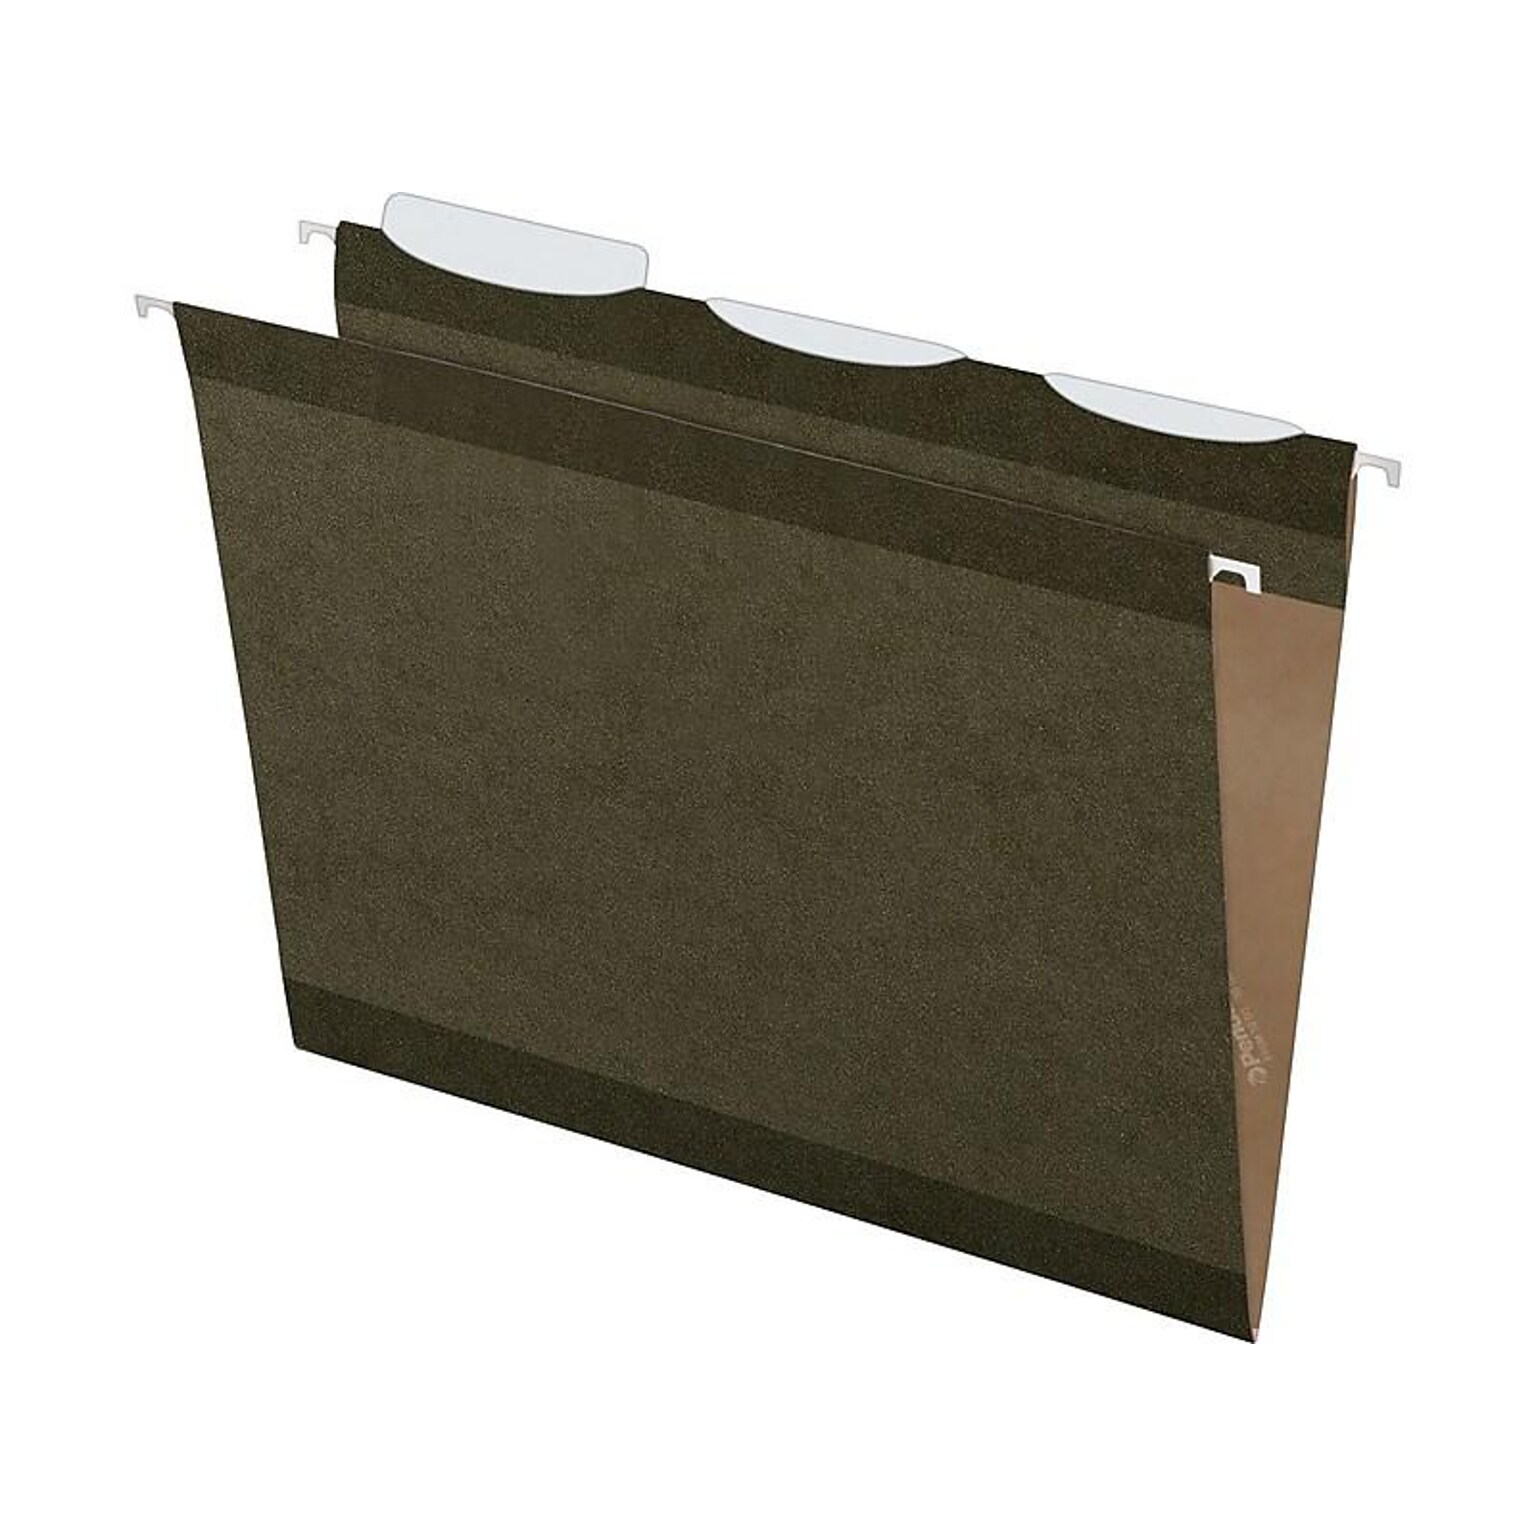 Pendaflex Ready-Tab Reinforced Hanging File Folders, 3-Tab, Letter Size, Standard Green, 25/Box (PFX 42620)